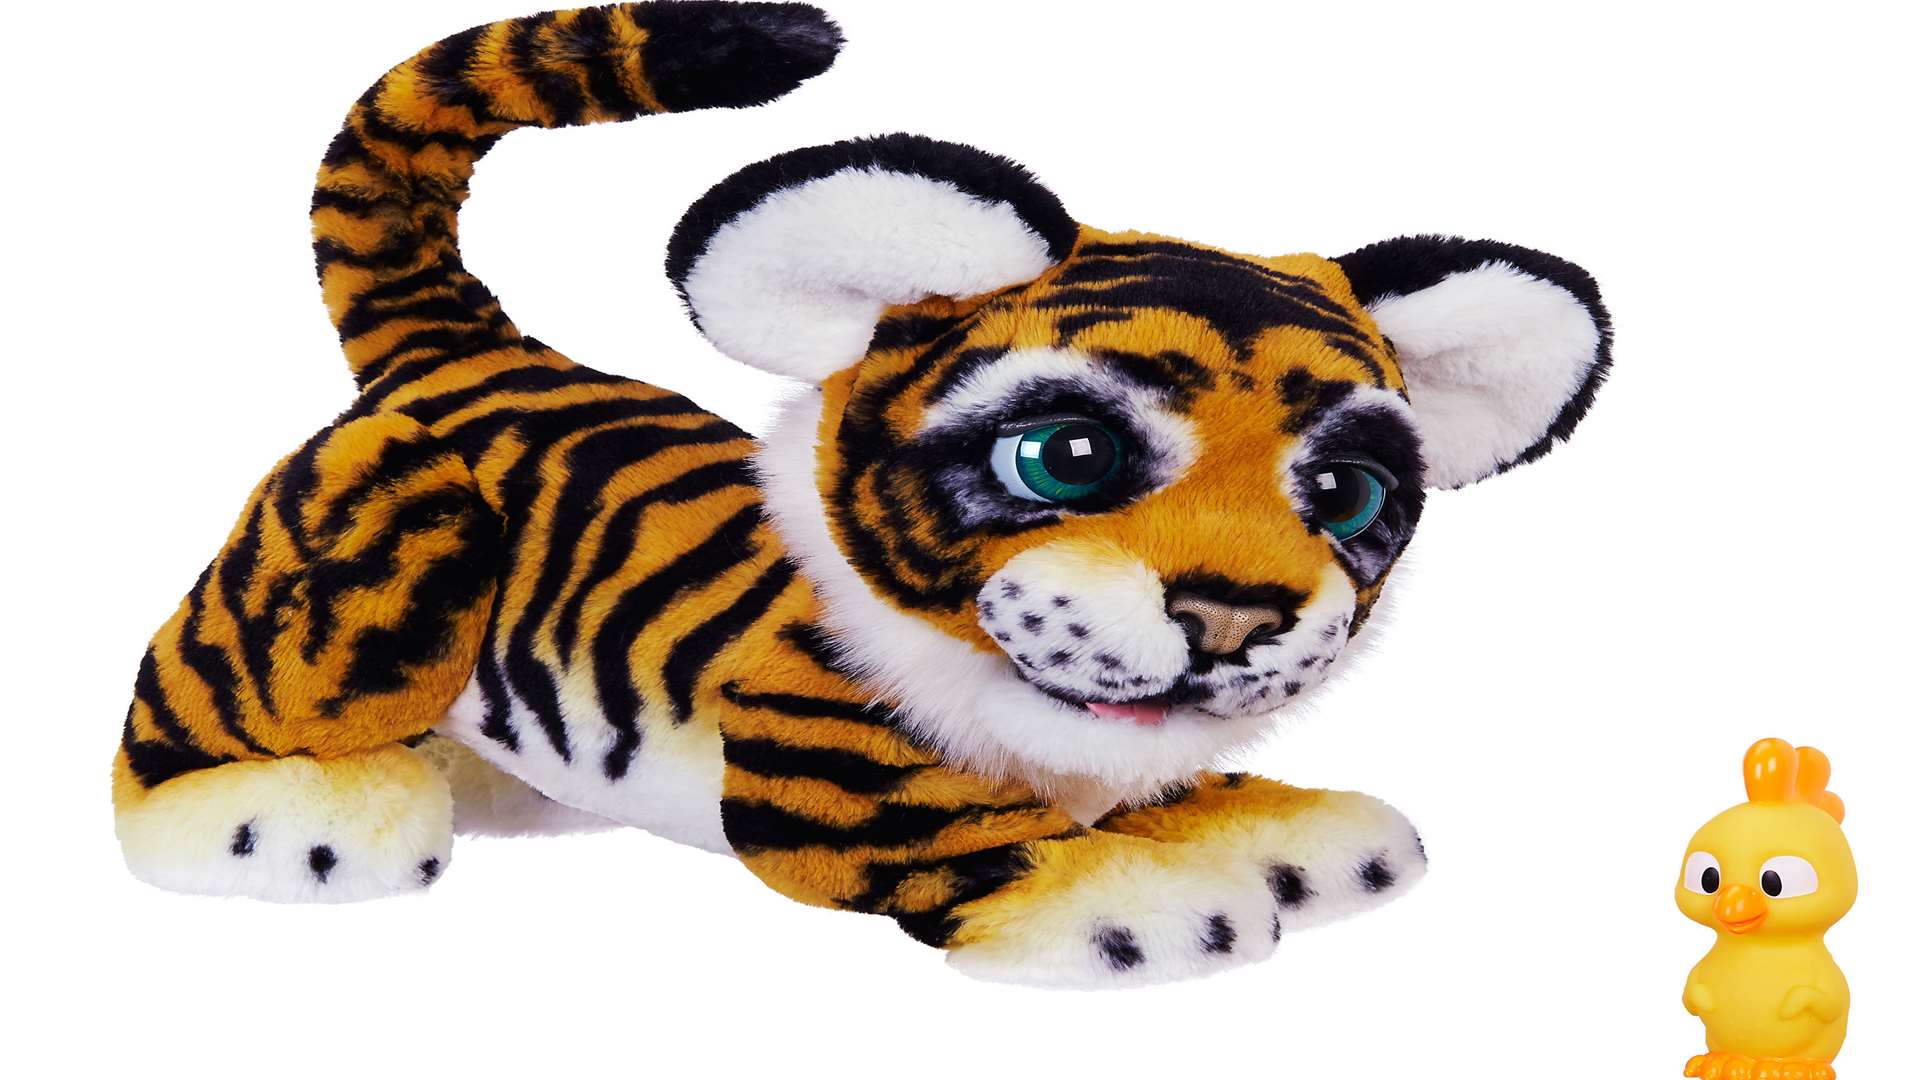 FurReal Roarin' Tyler The Playful Tiger